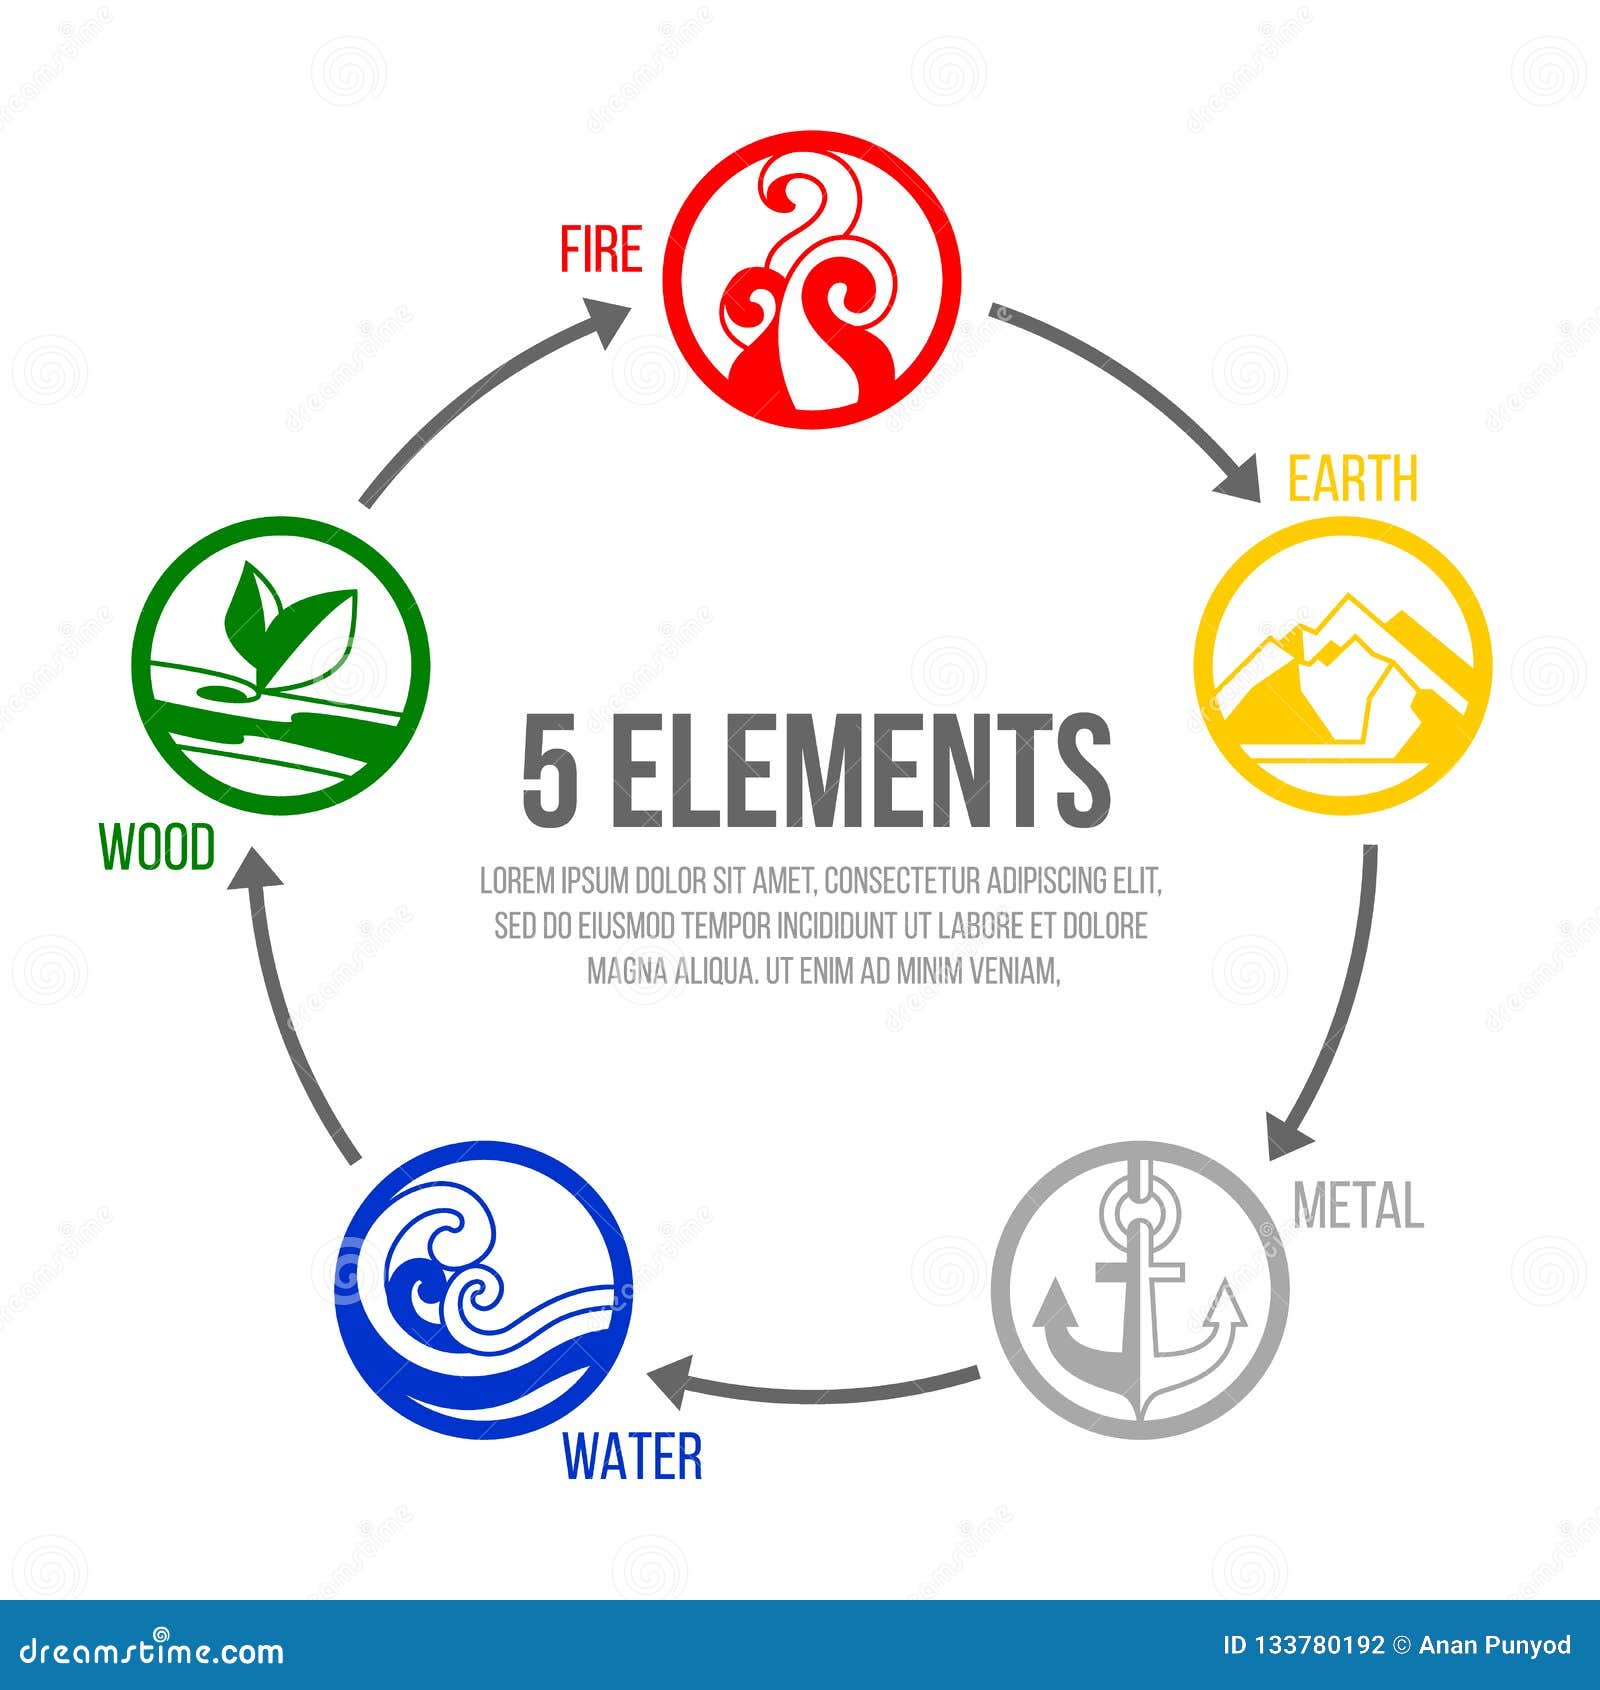 Elements of nature 5 Five Elements